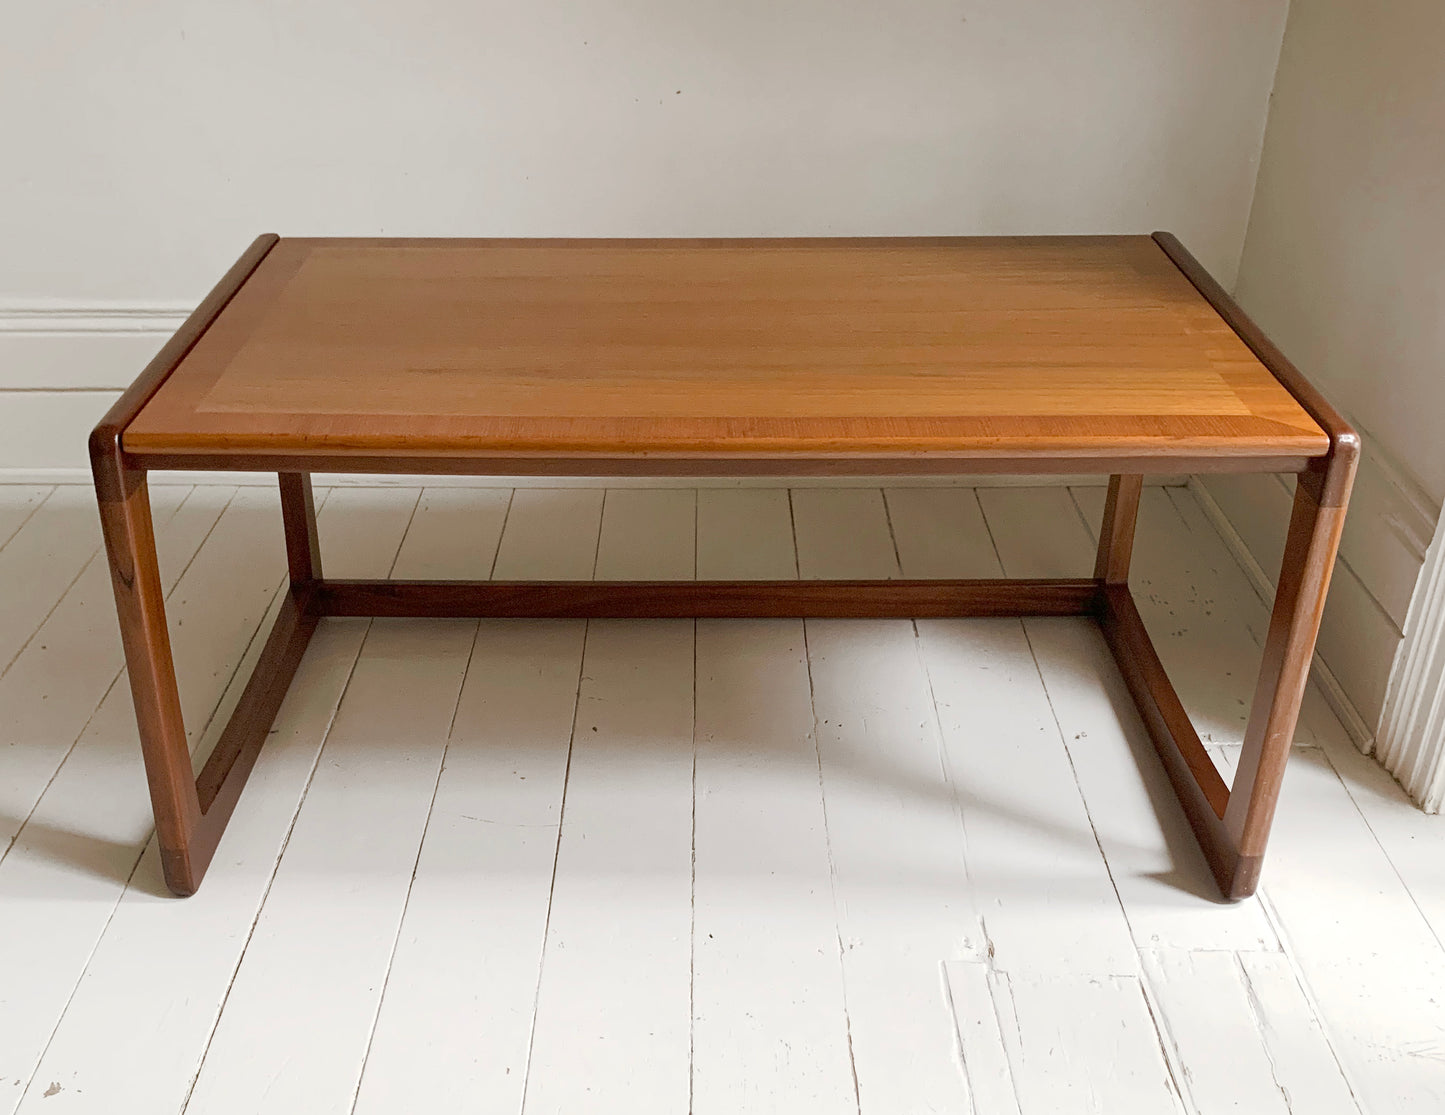 Stunning Mid Century Teak box frame coffee table with hinge, use it two ways